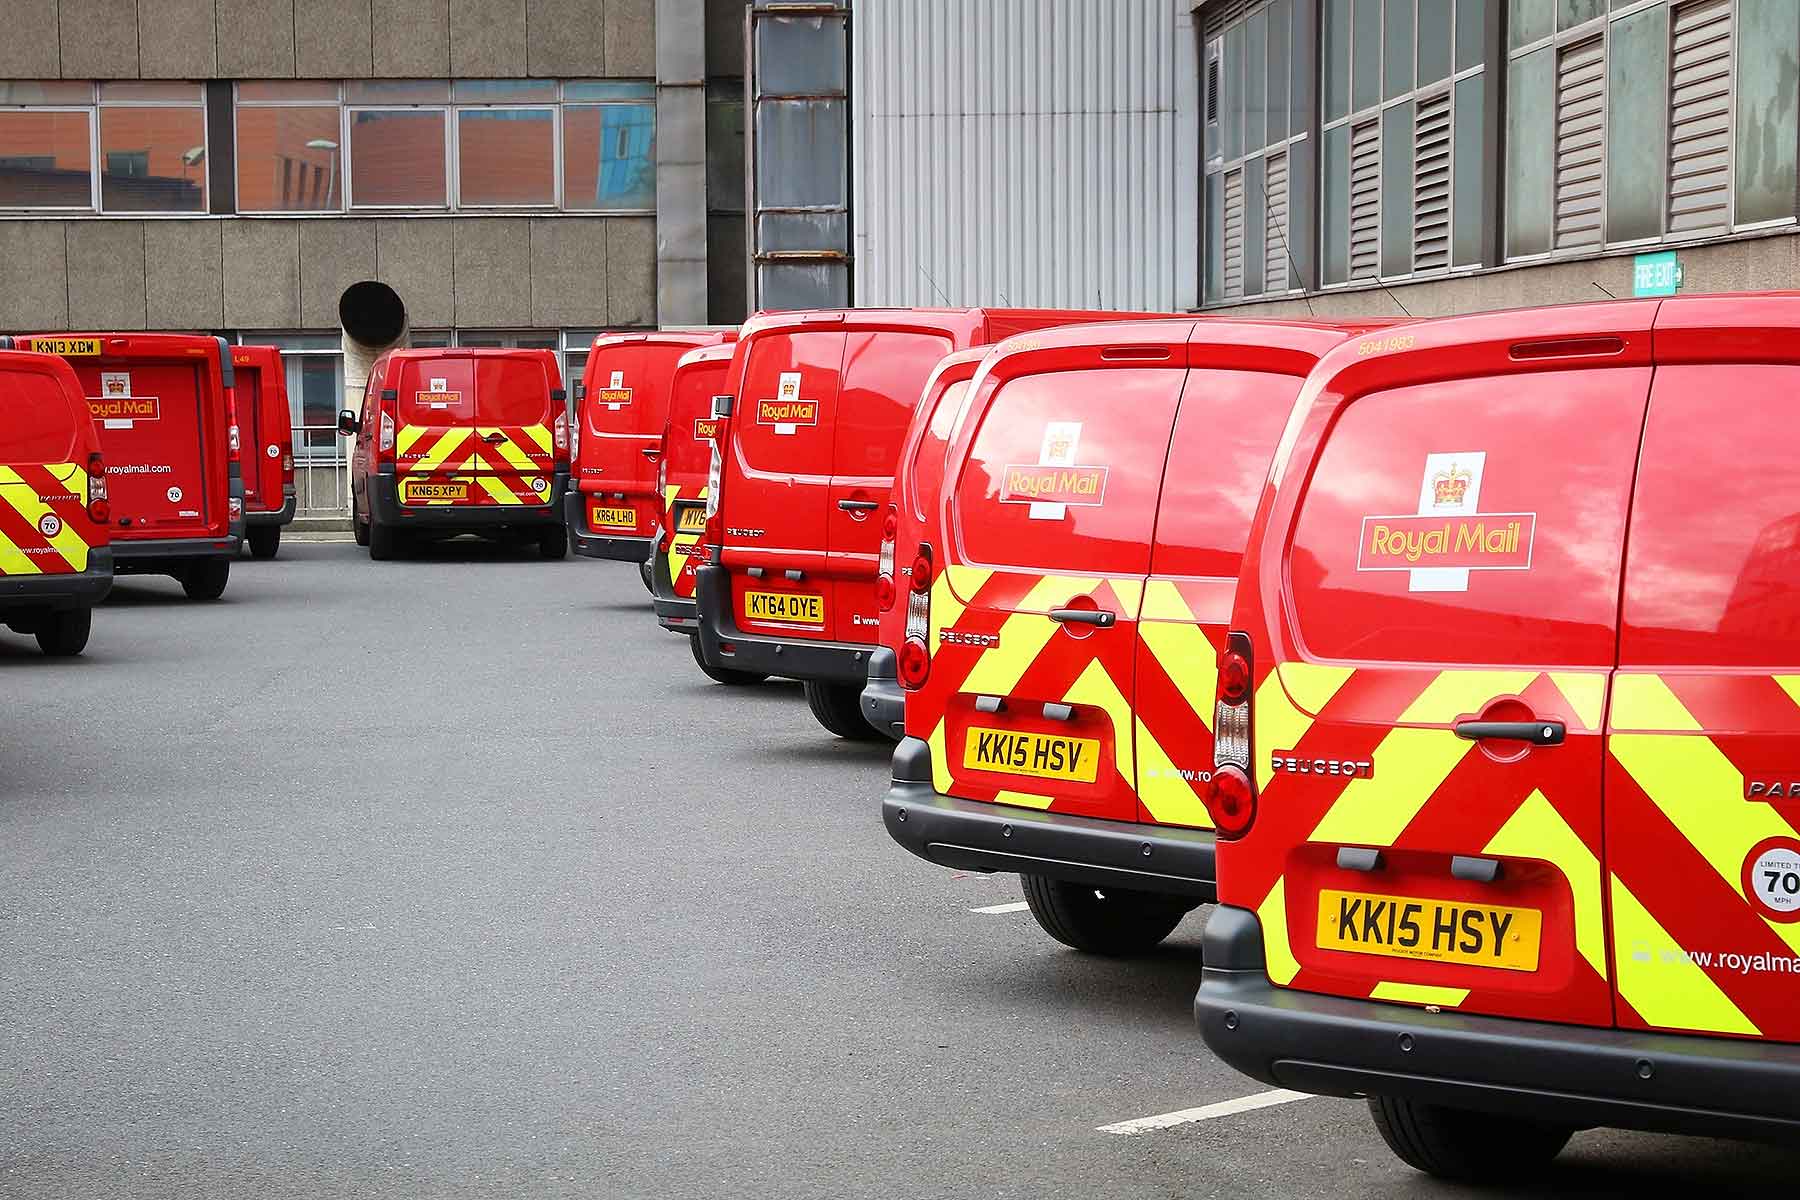 Royal Mail fleet of vans